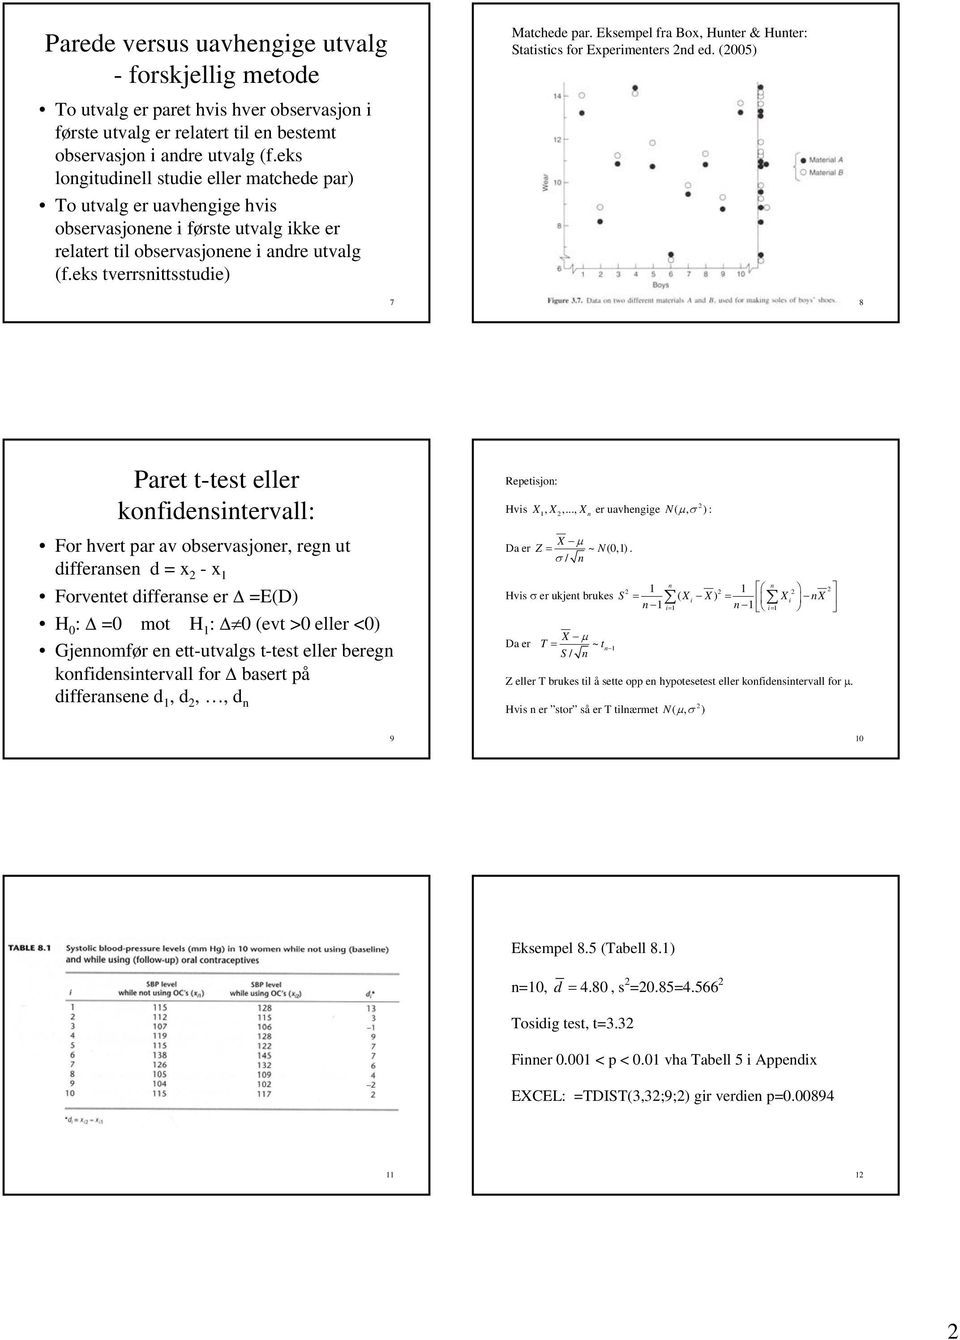 Eksempel fra Box, Huter & Huter: Statistics for Experimeters d ed.